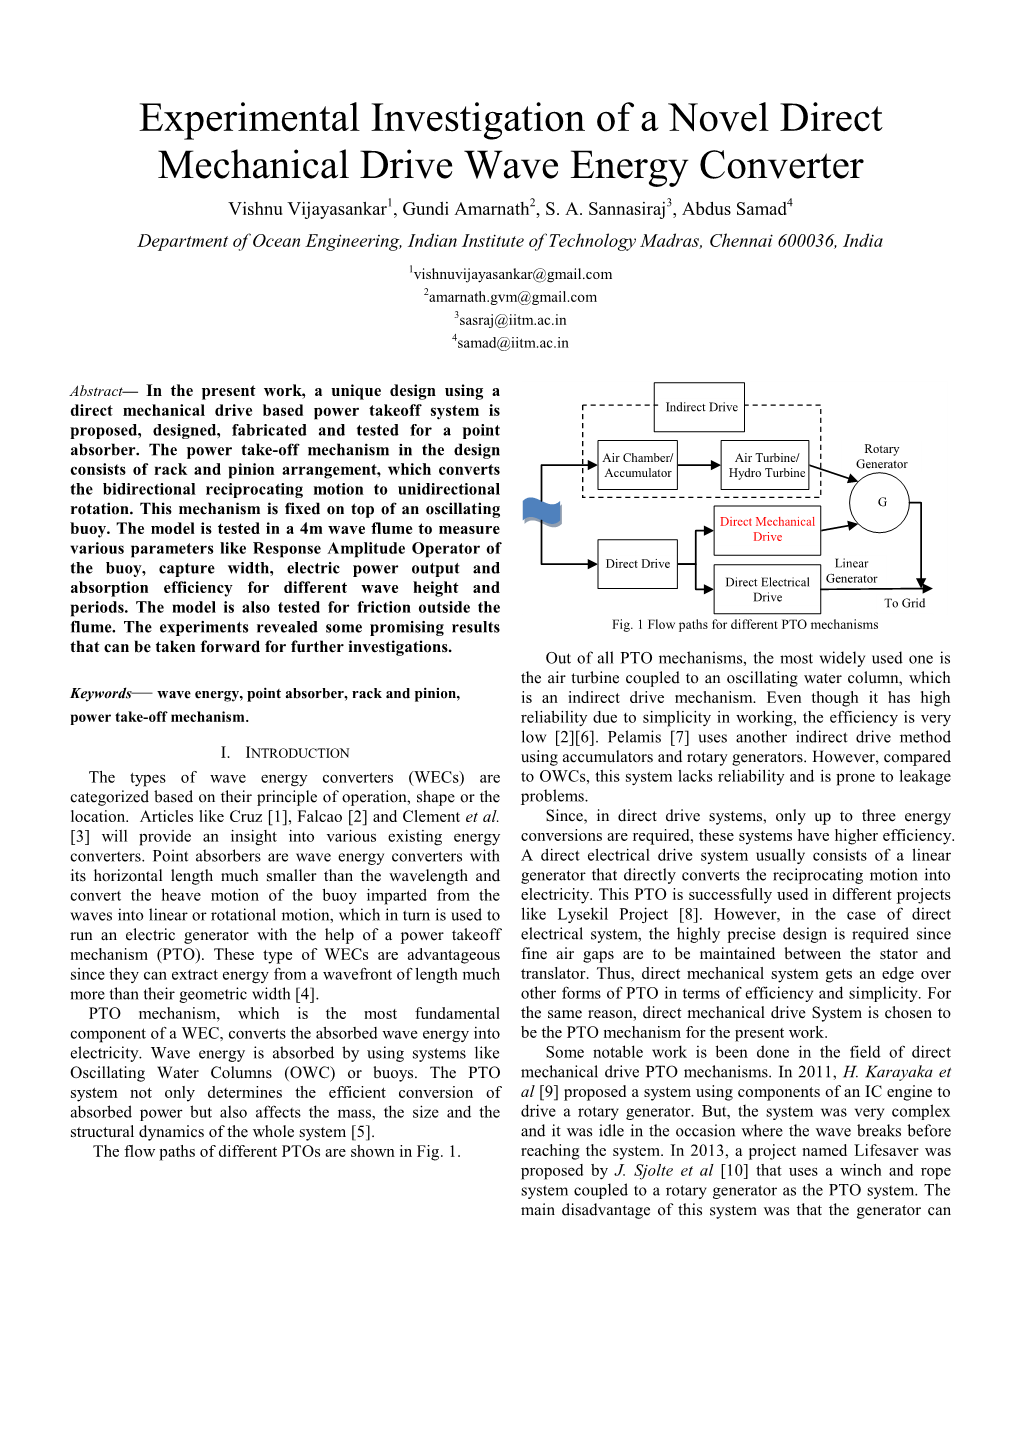 Experimental Investigation of a Novel Direct Mechanical Drive Wave Energy Converter Vishnu Vijayasankar1, Gundi Amarnath2, S